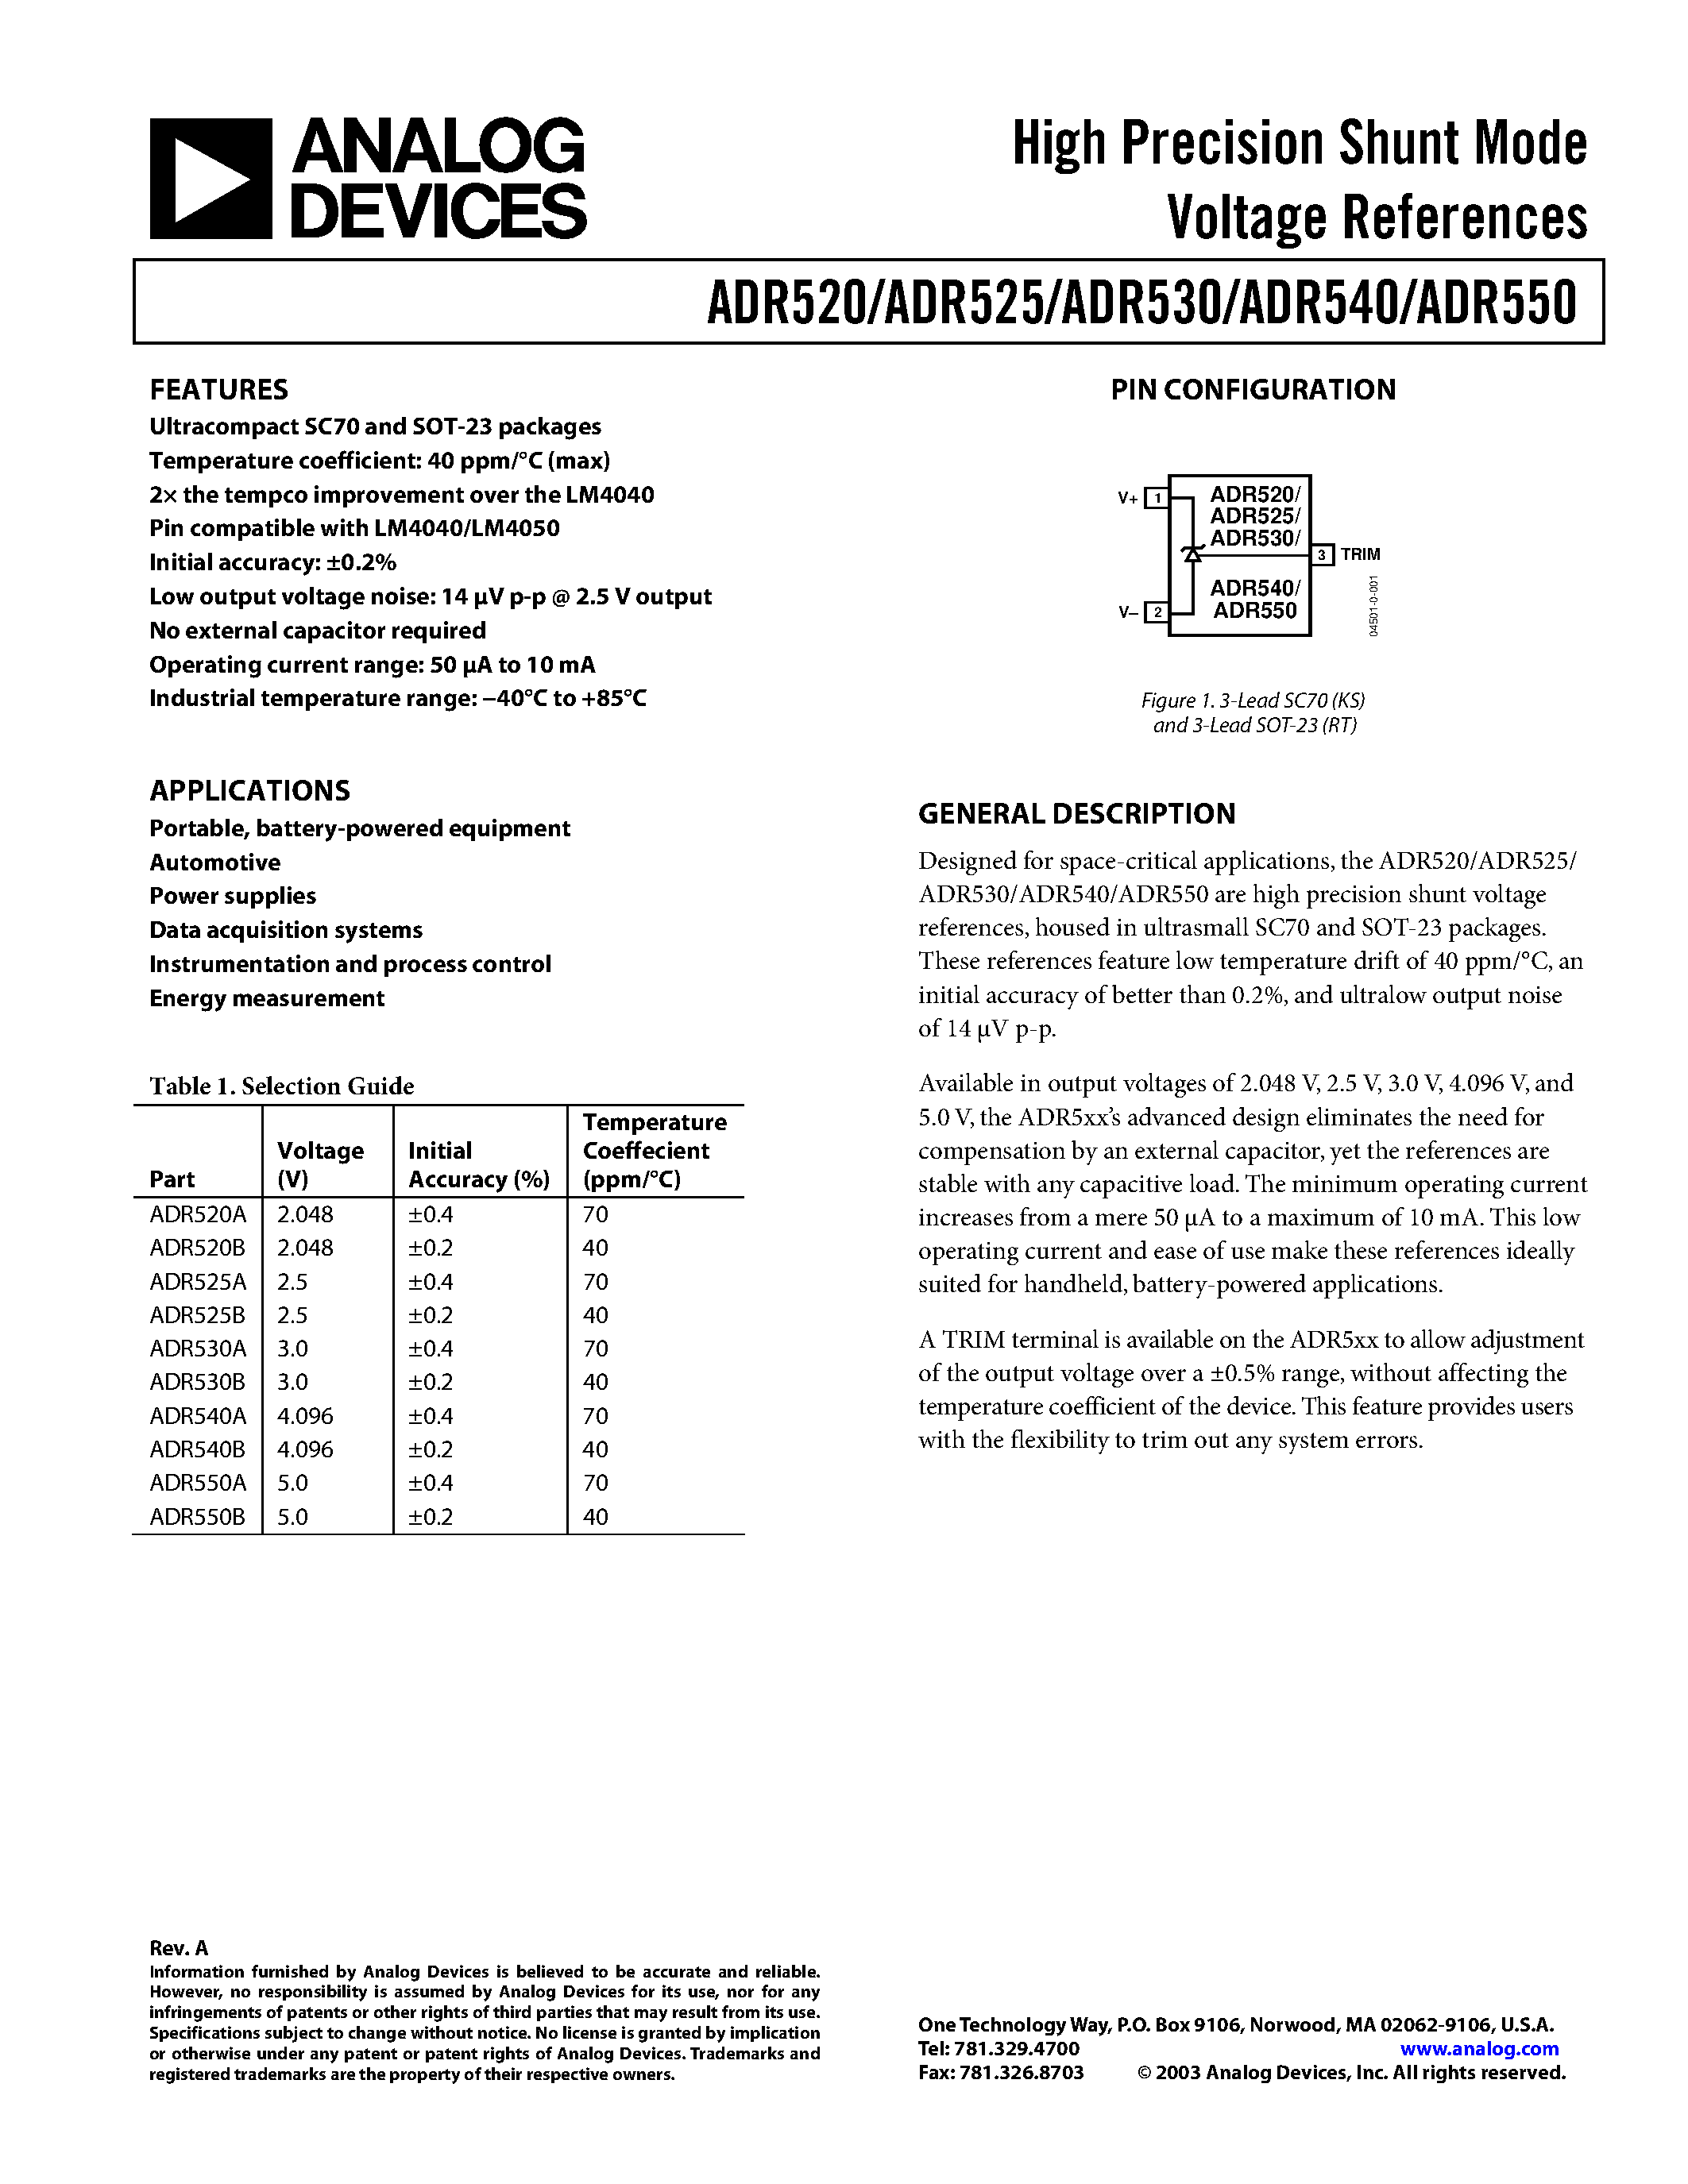 Даташит ADR540BKS-R2 - High Precision Shunt Mode Voltage References страница 1